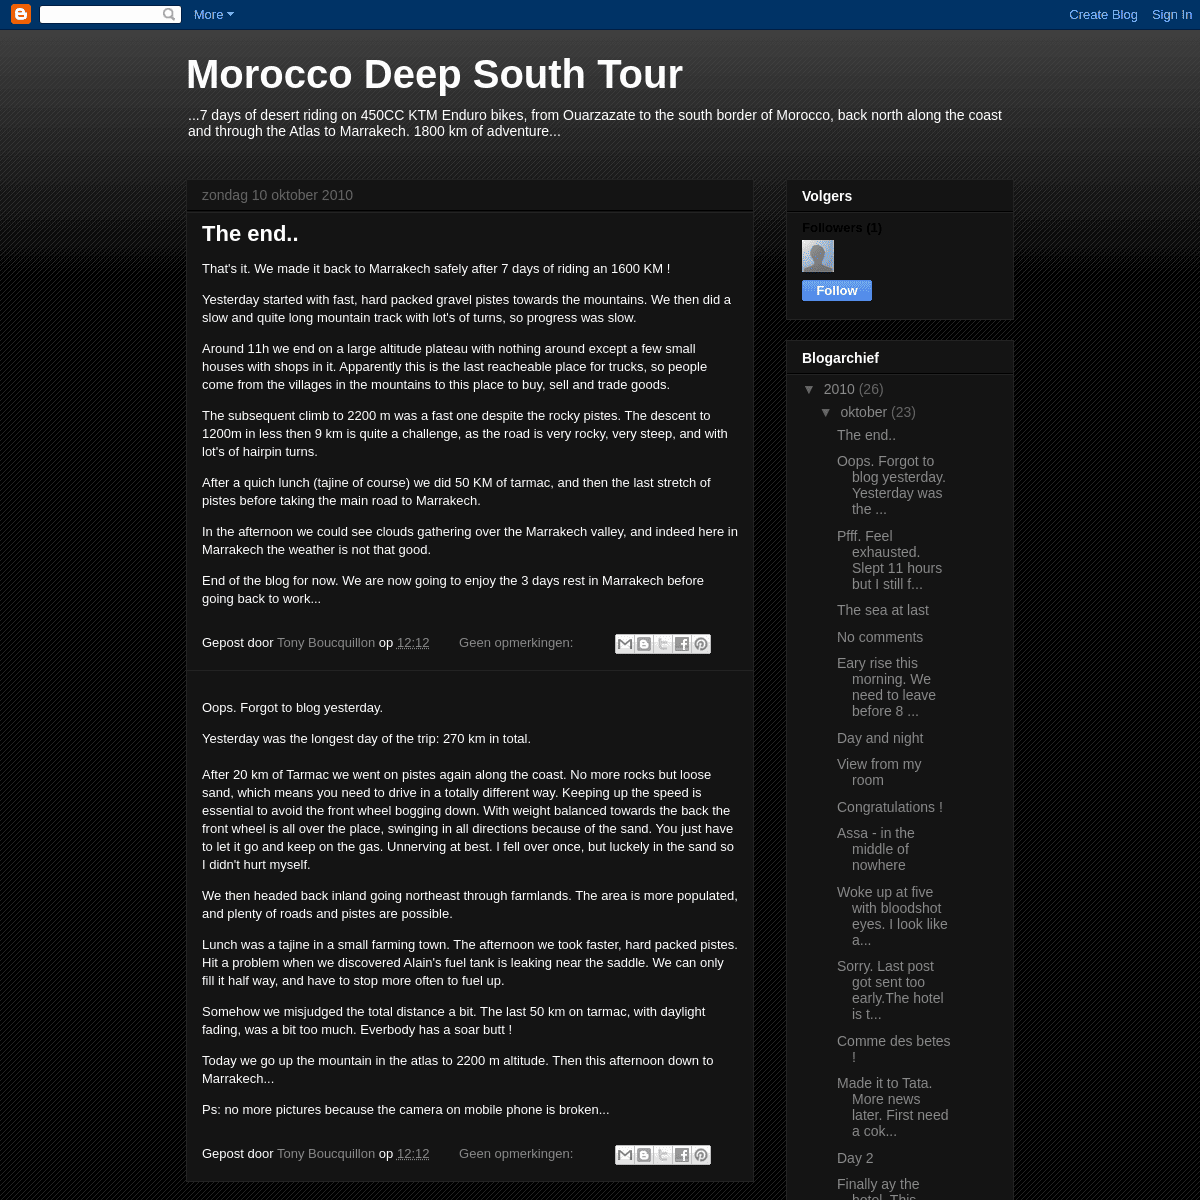 A complete backup of deepsouthtour.blogspot.com